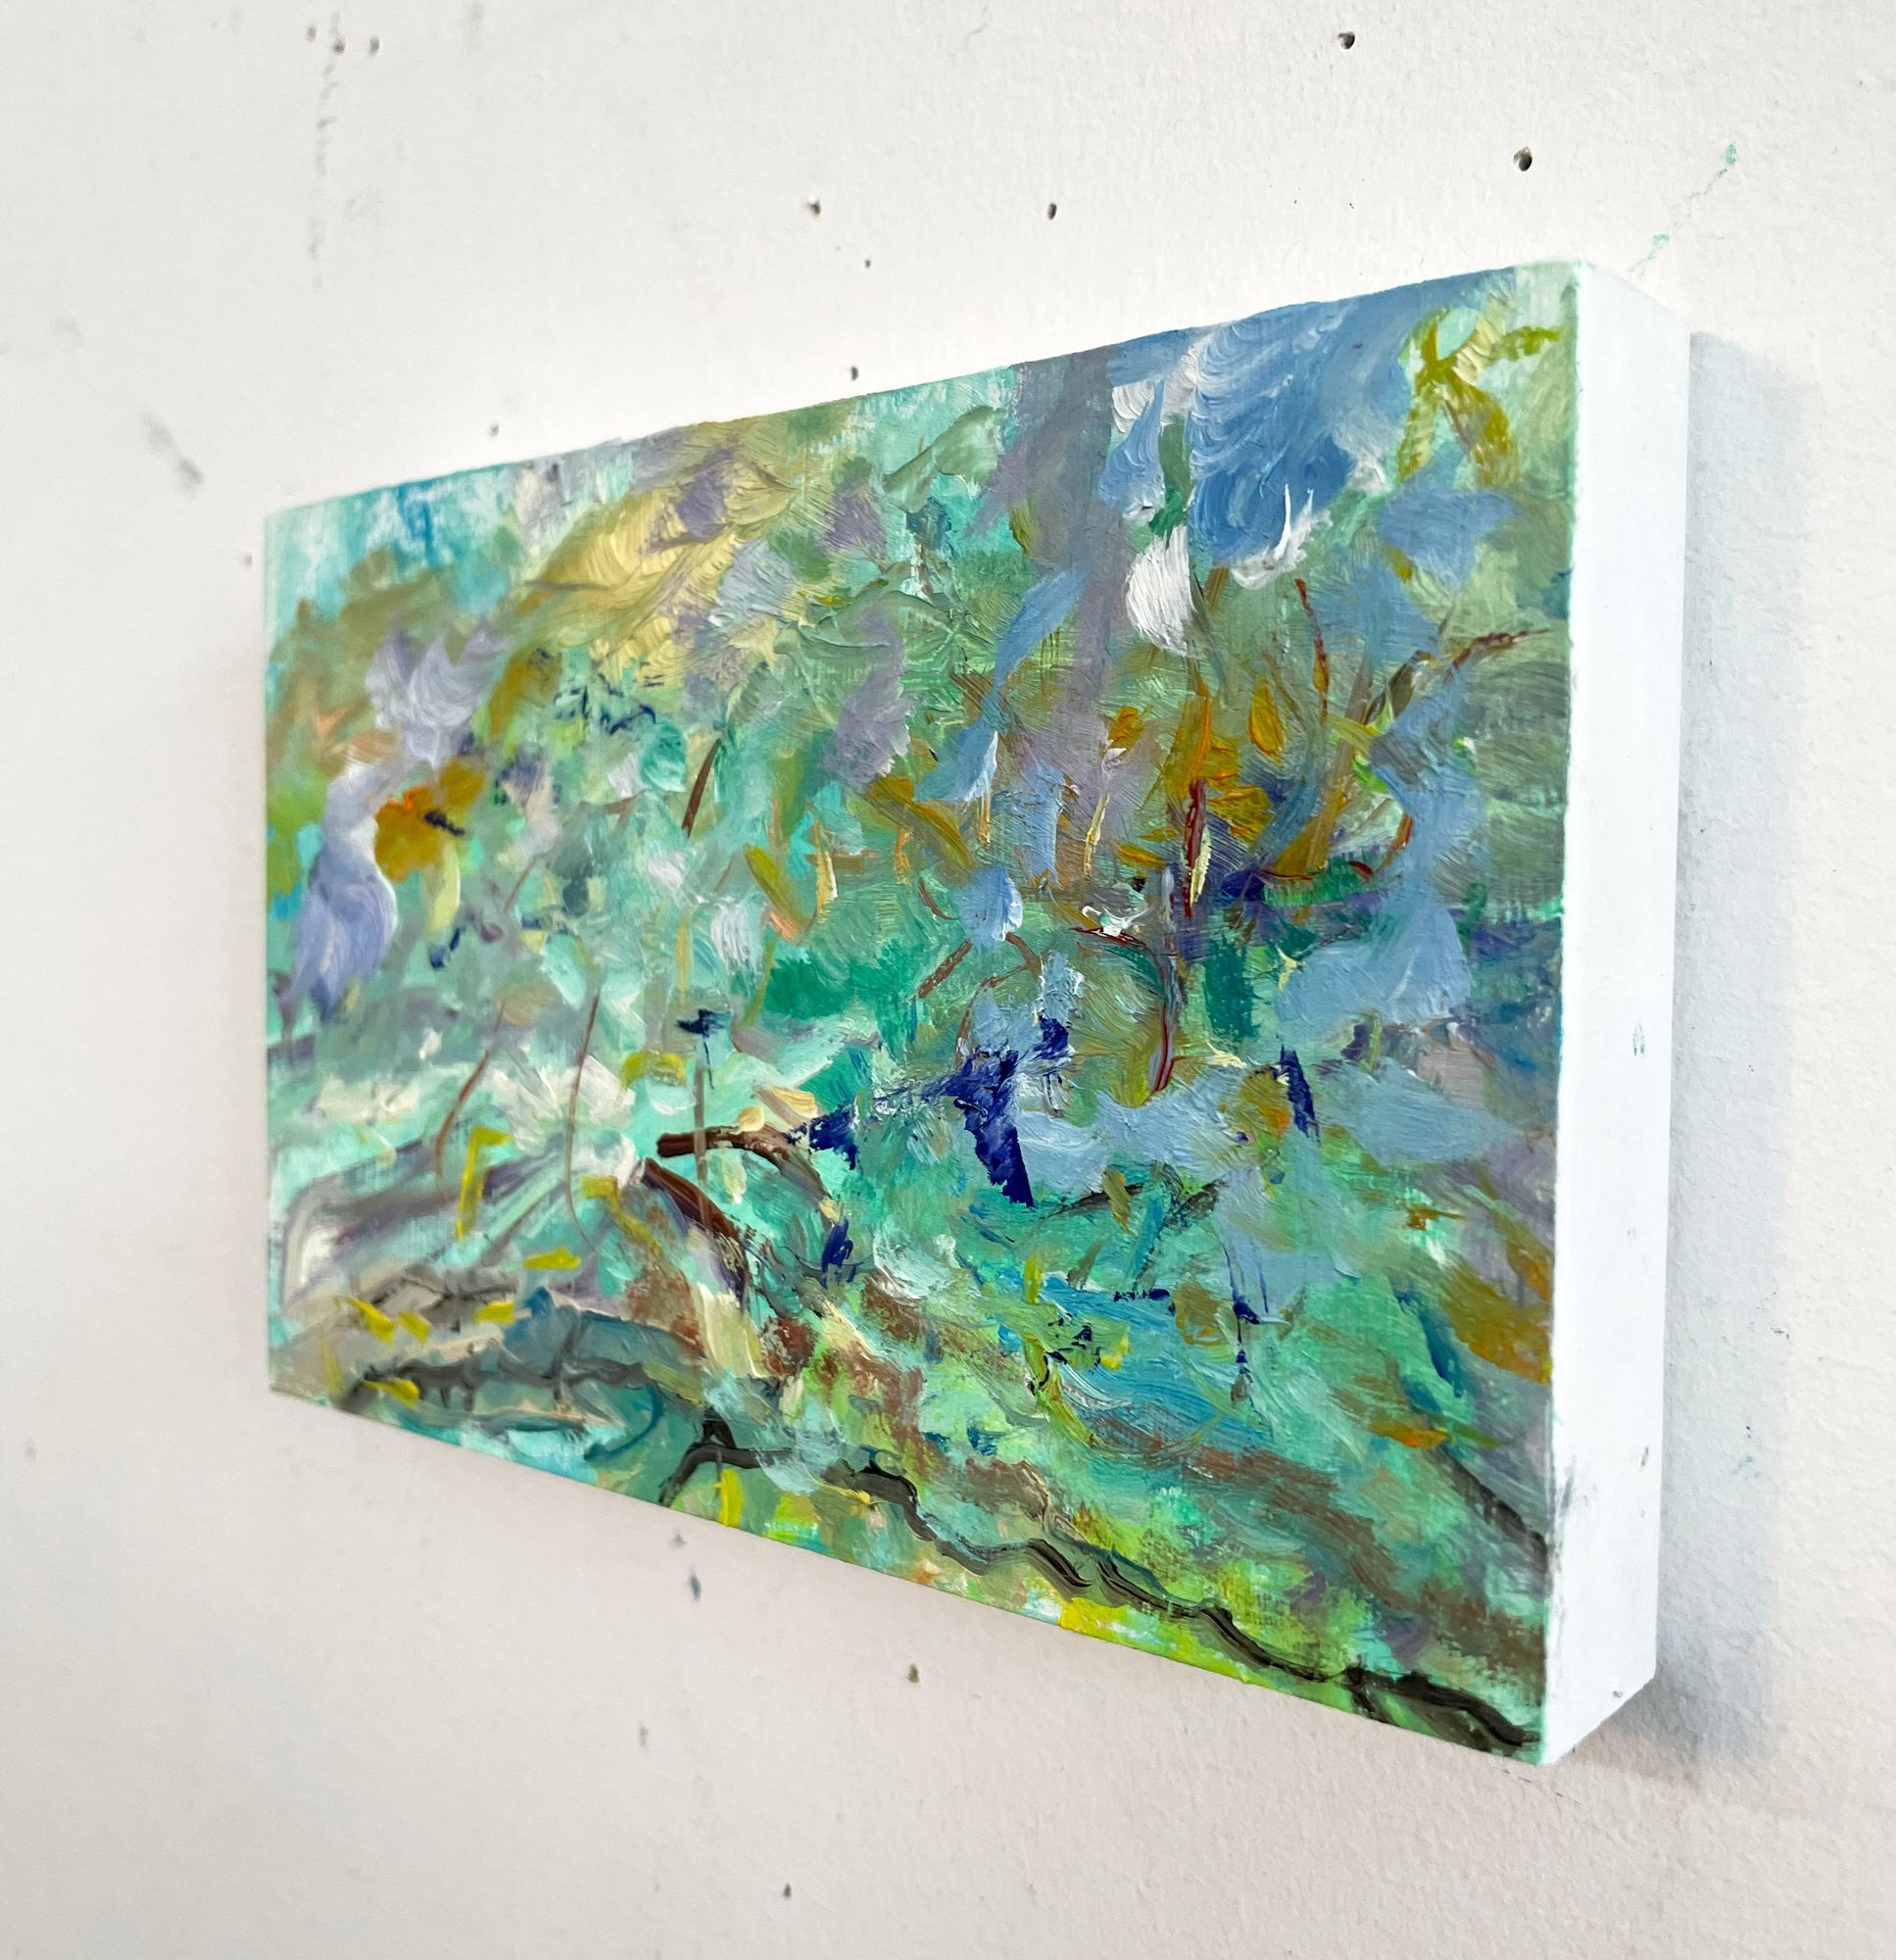 Ashley-Garrett-Magna-Gloria-painting-on-panel-wall-2.jpg